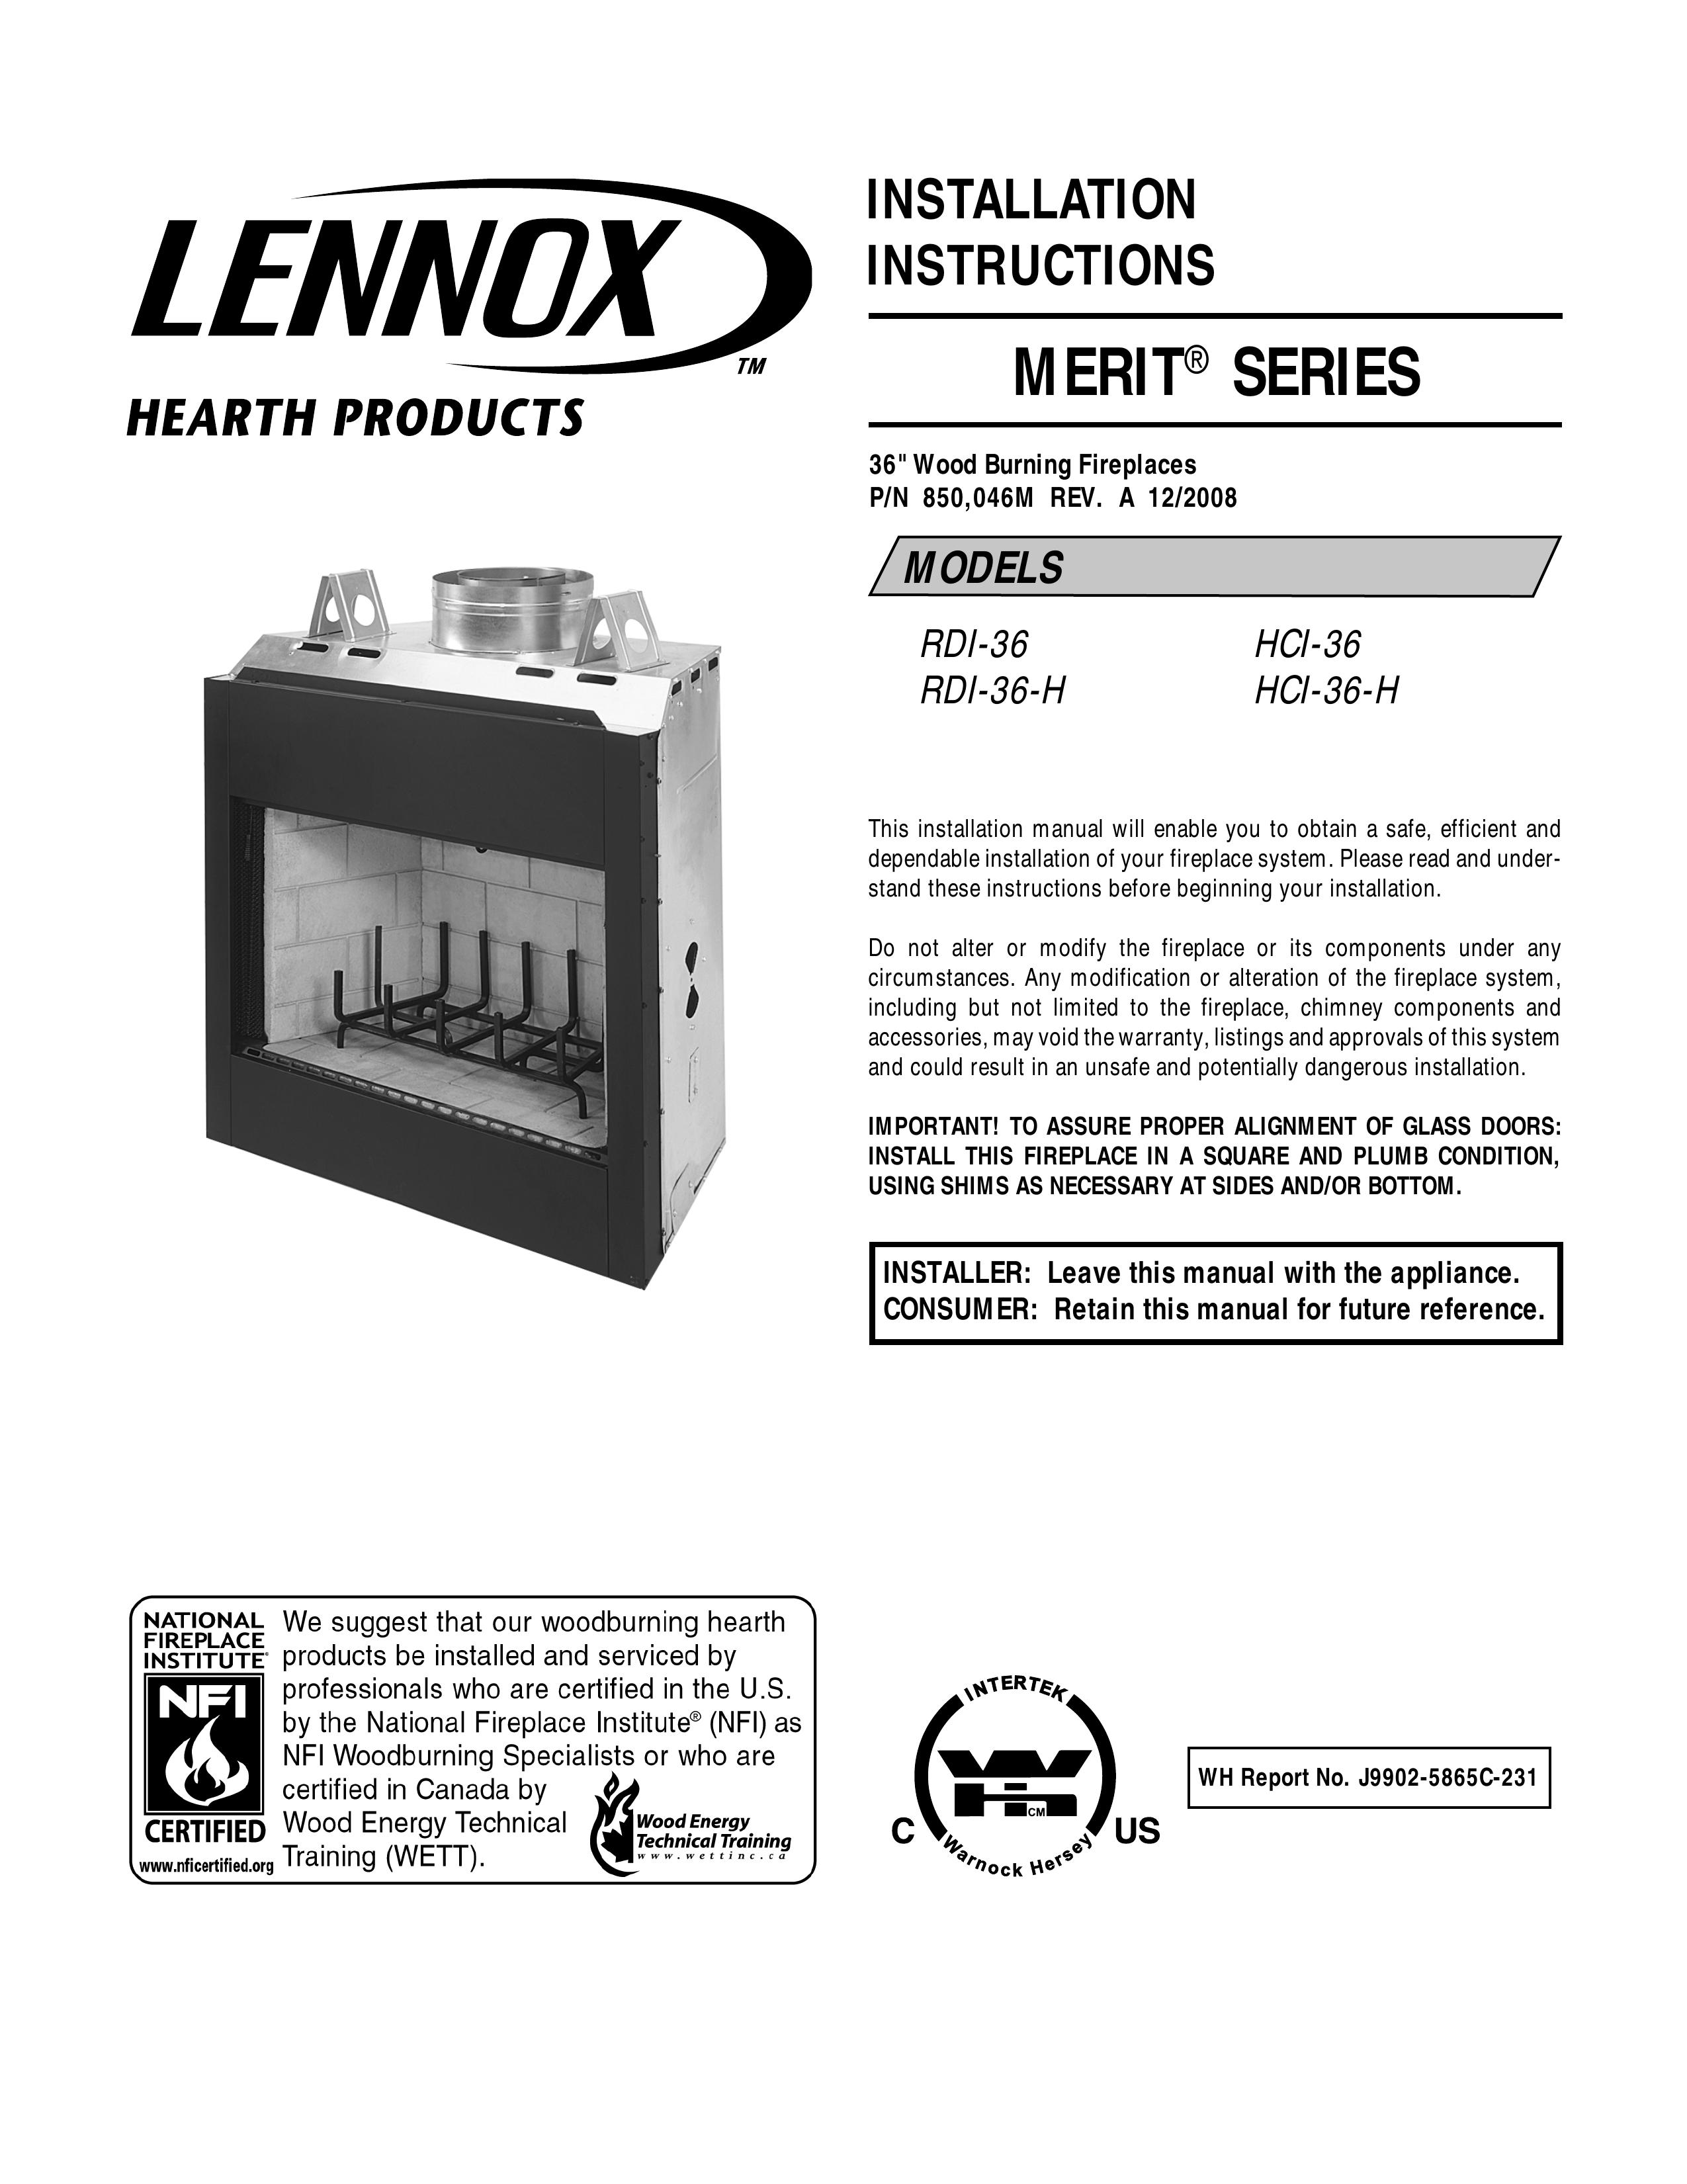 Lennox Hearth HCI-36-H Fire Pit User Manual